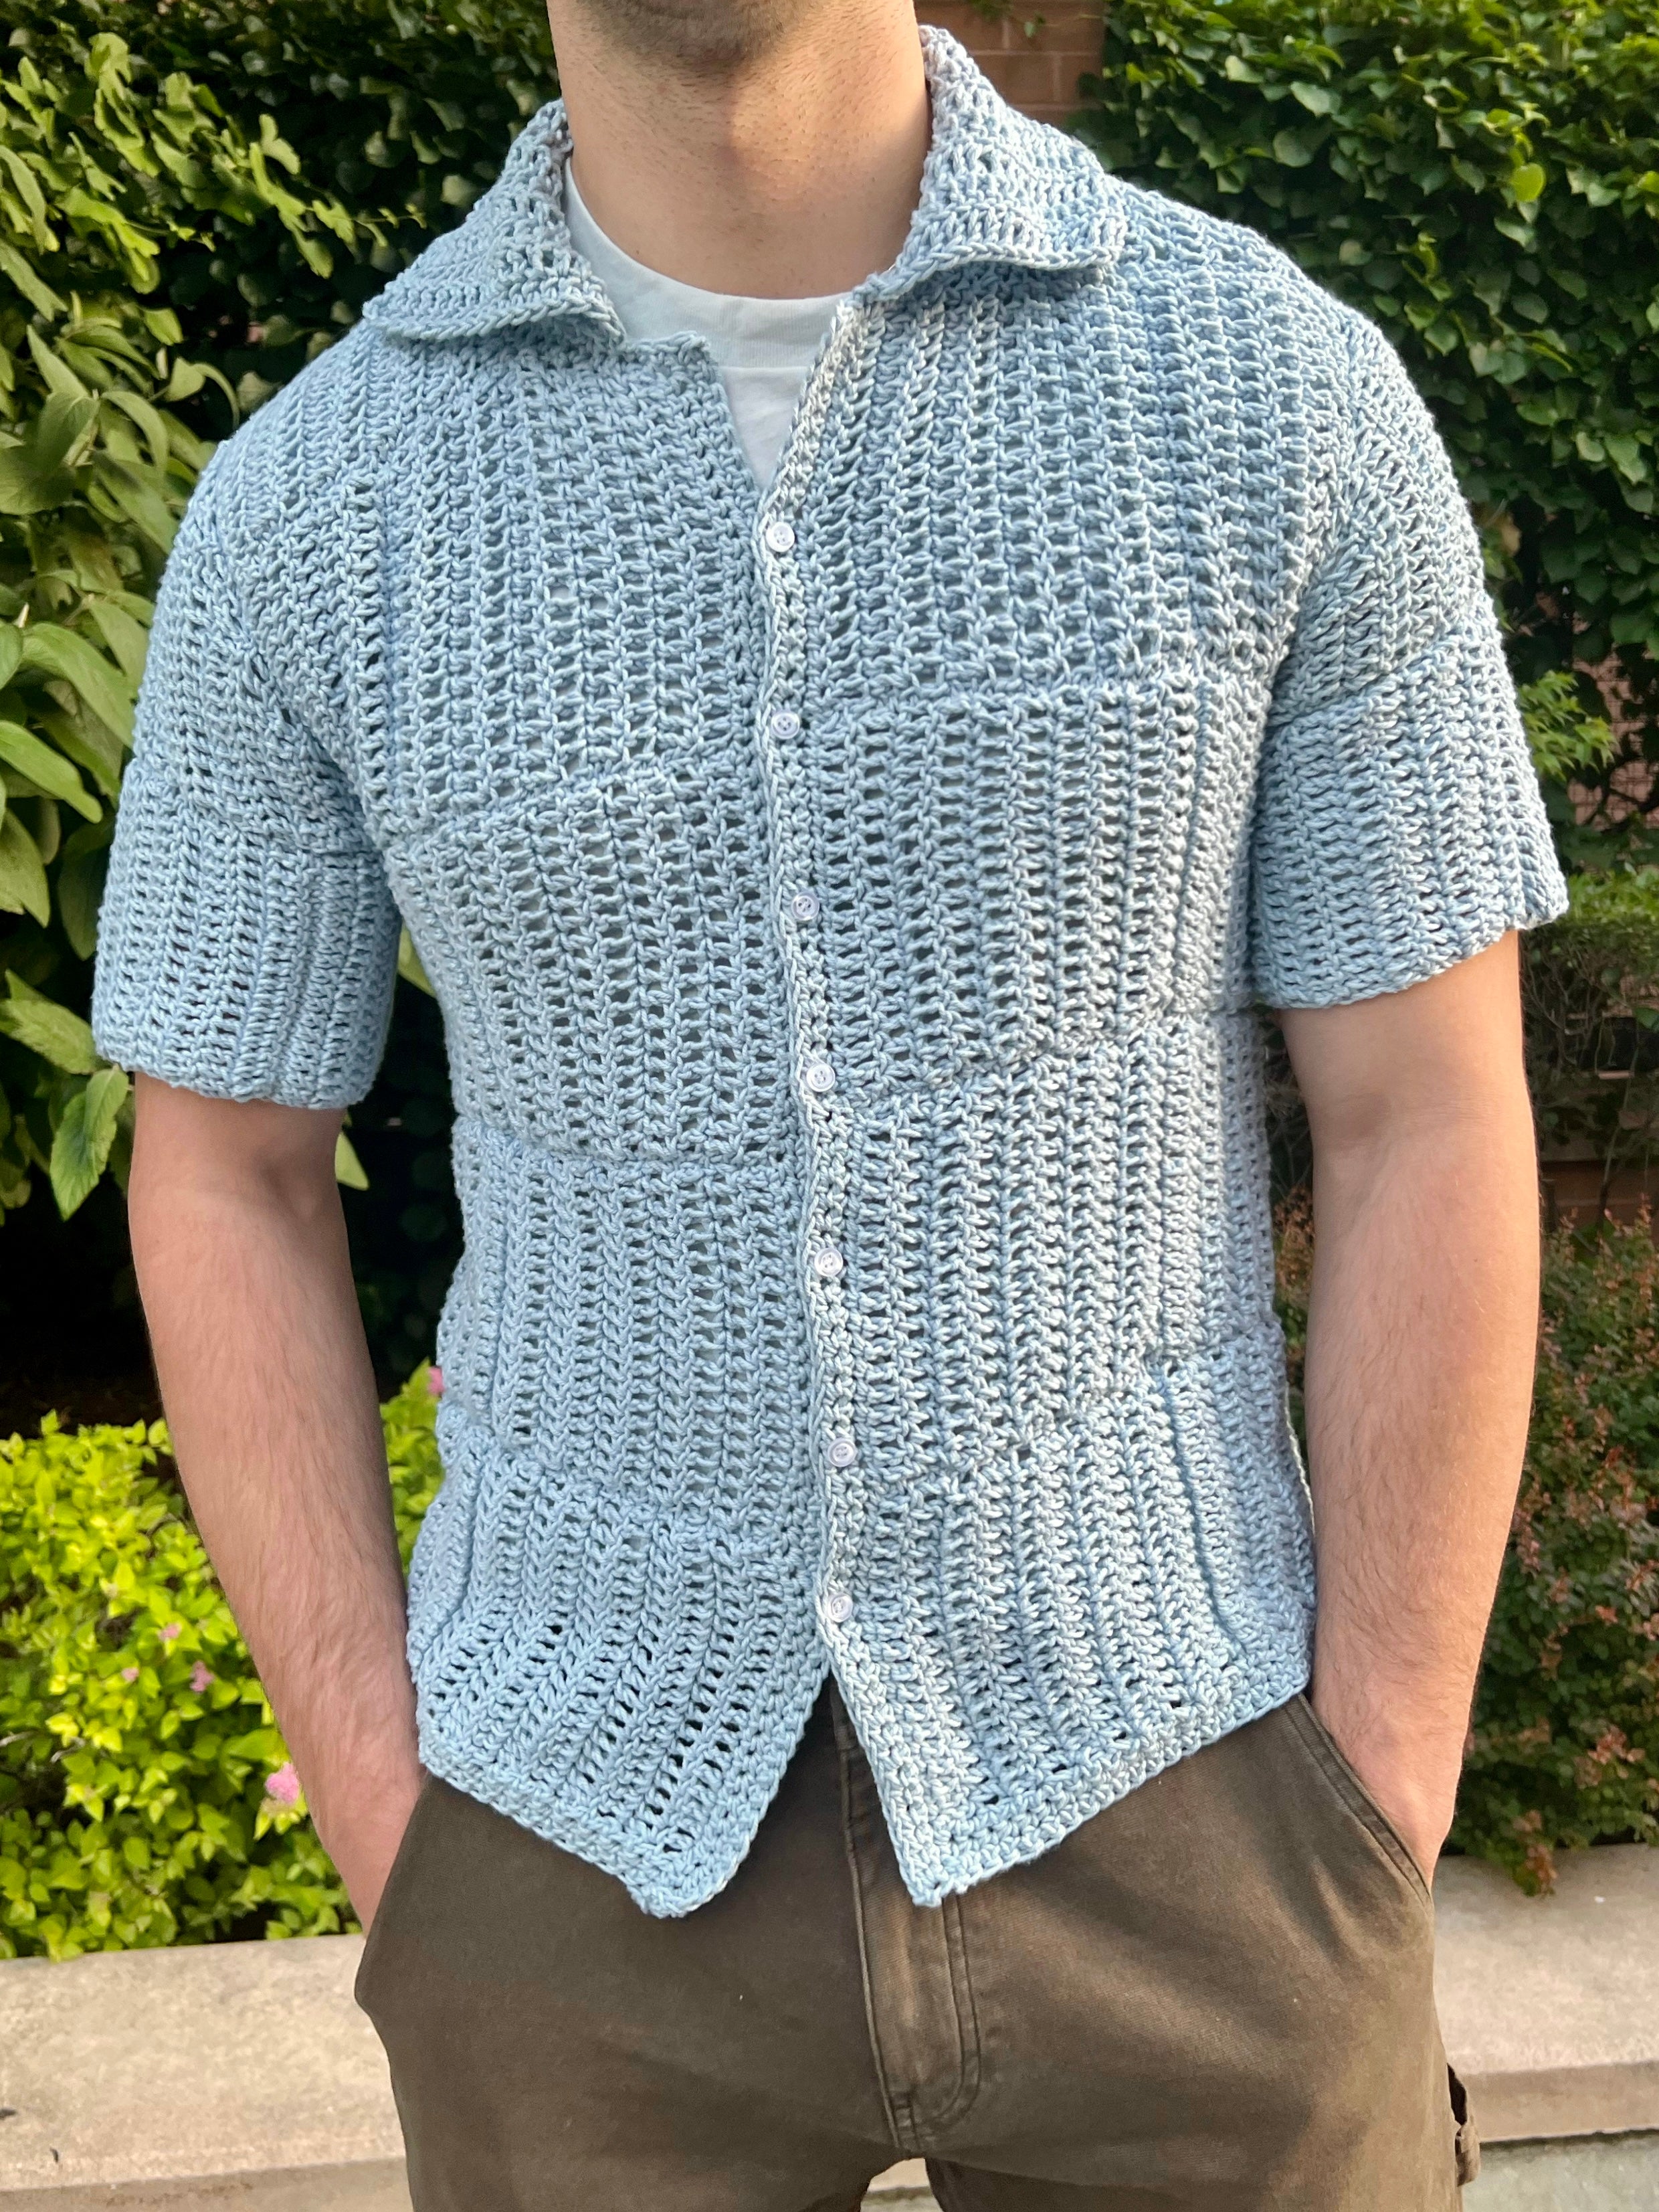 Essex Top Crochet Pattern – The Crocheting